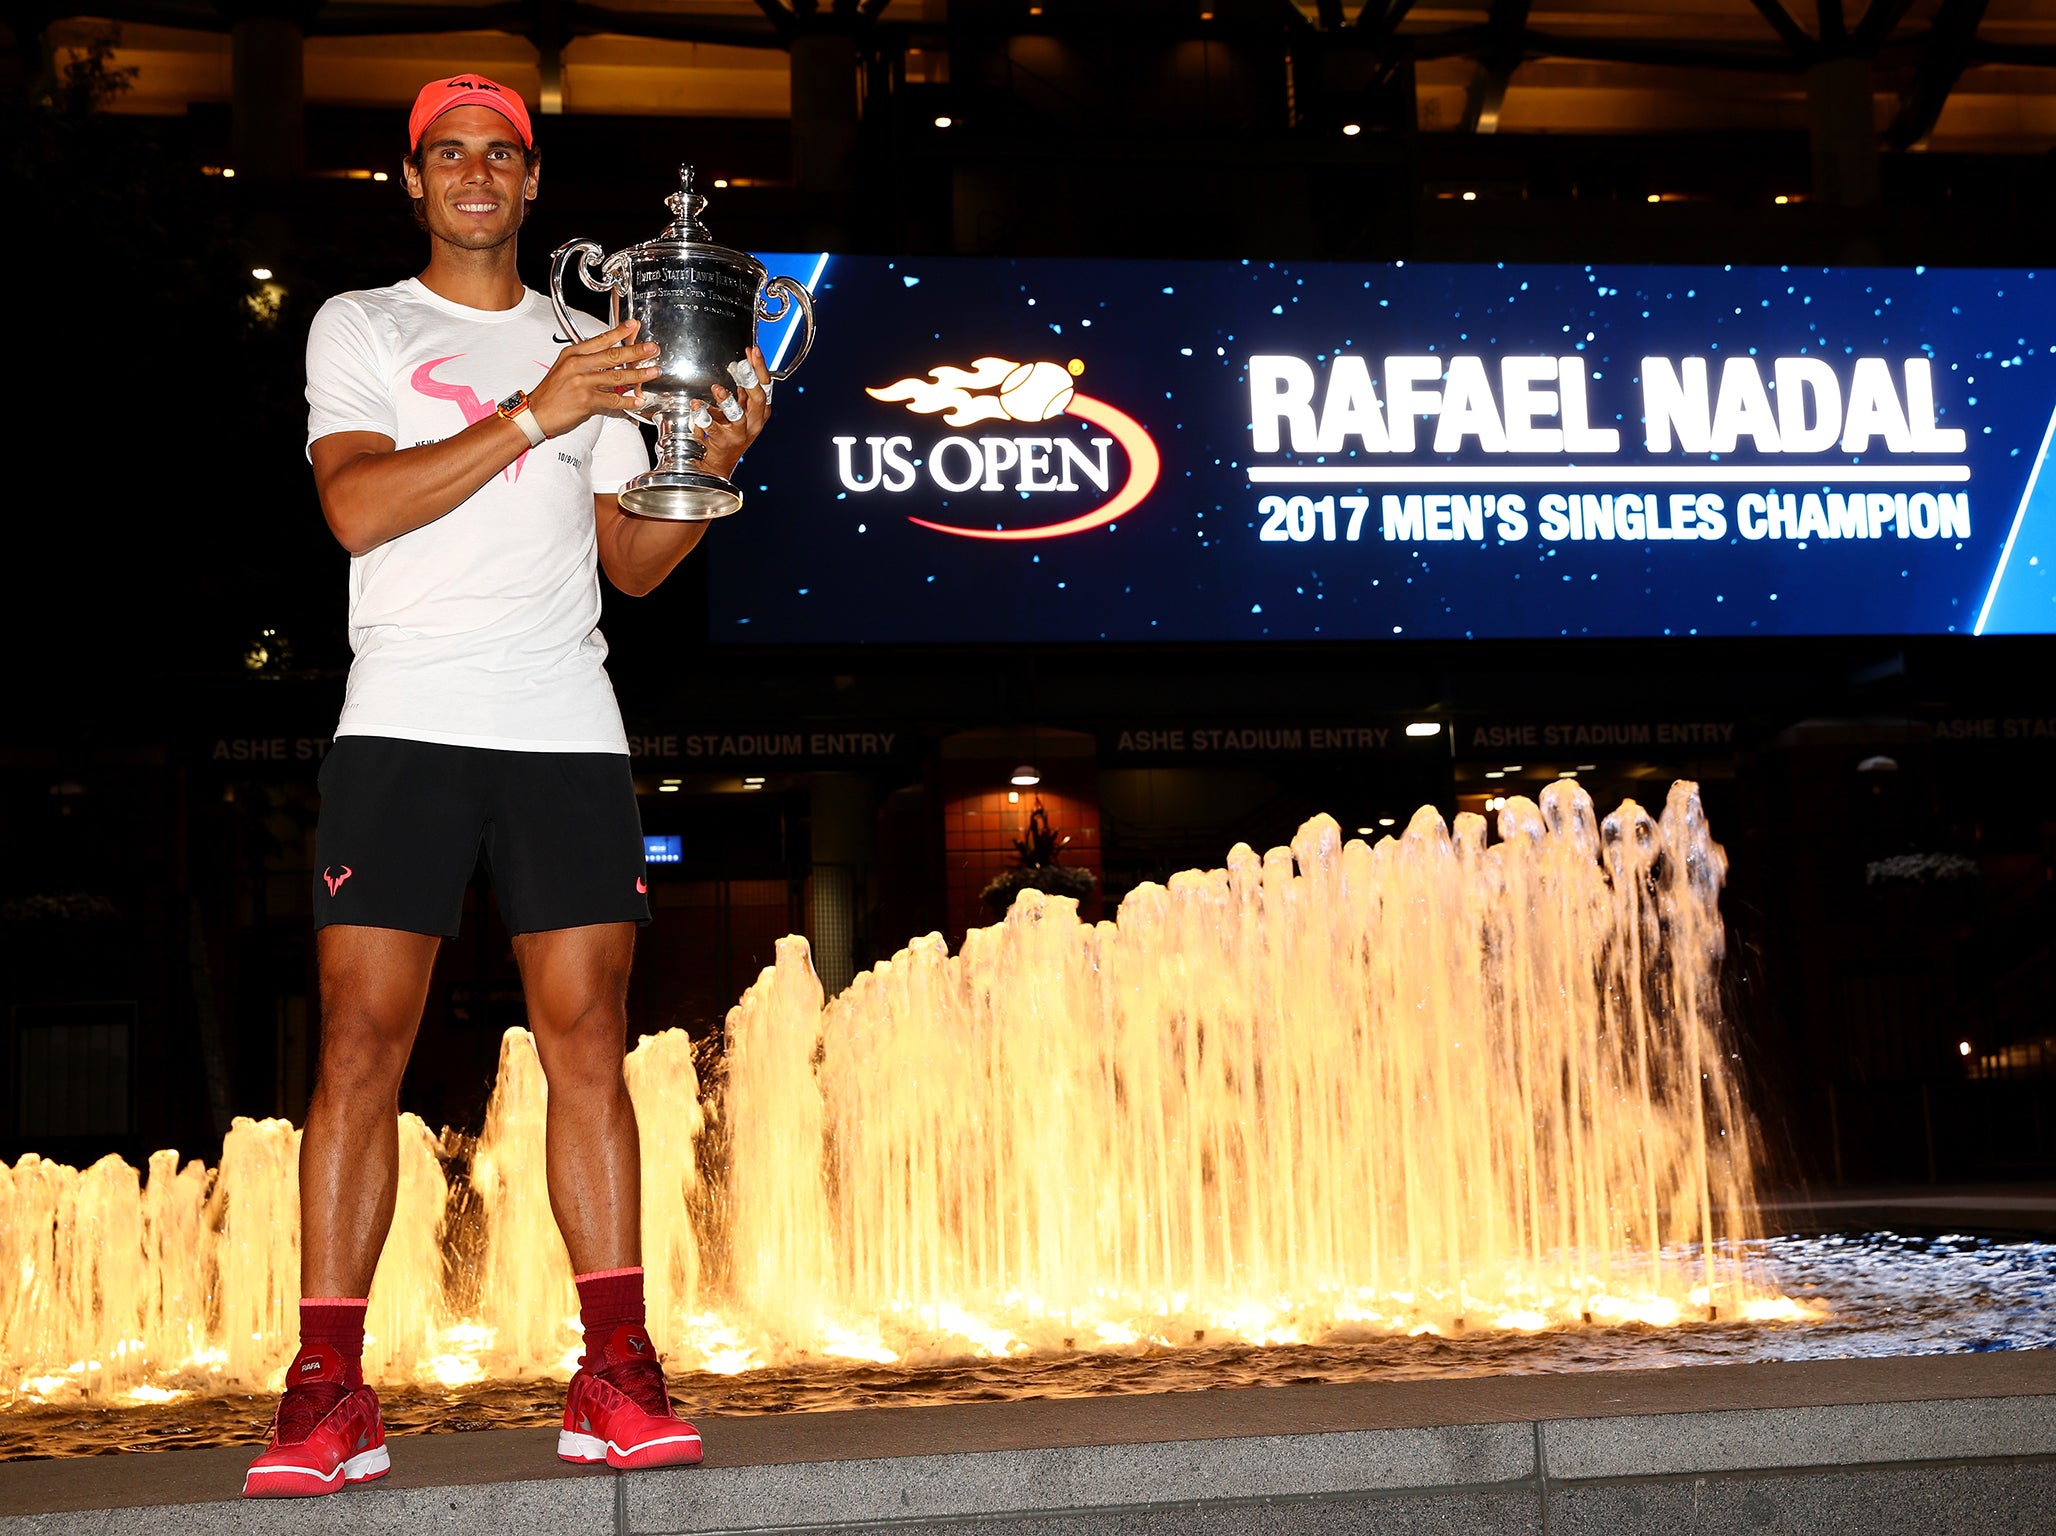 Nadal won two of the four Grand Slams this season